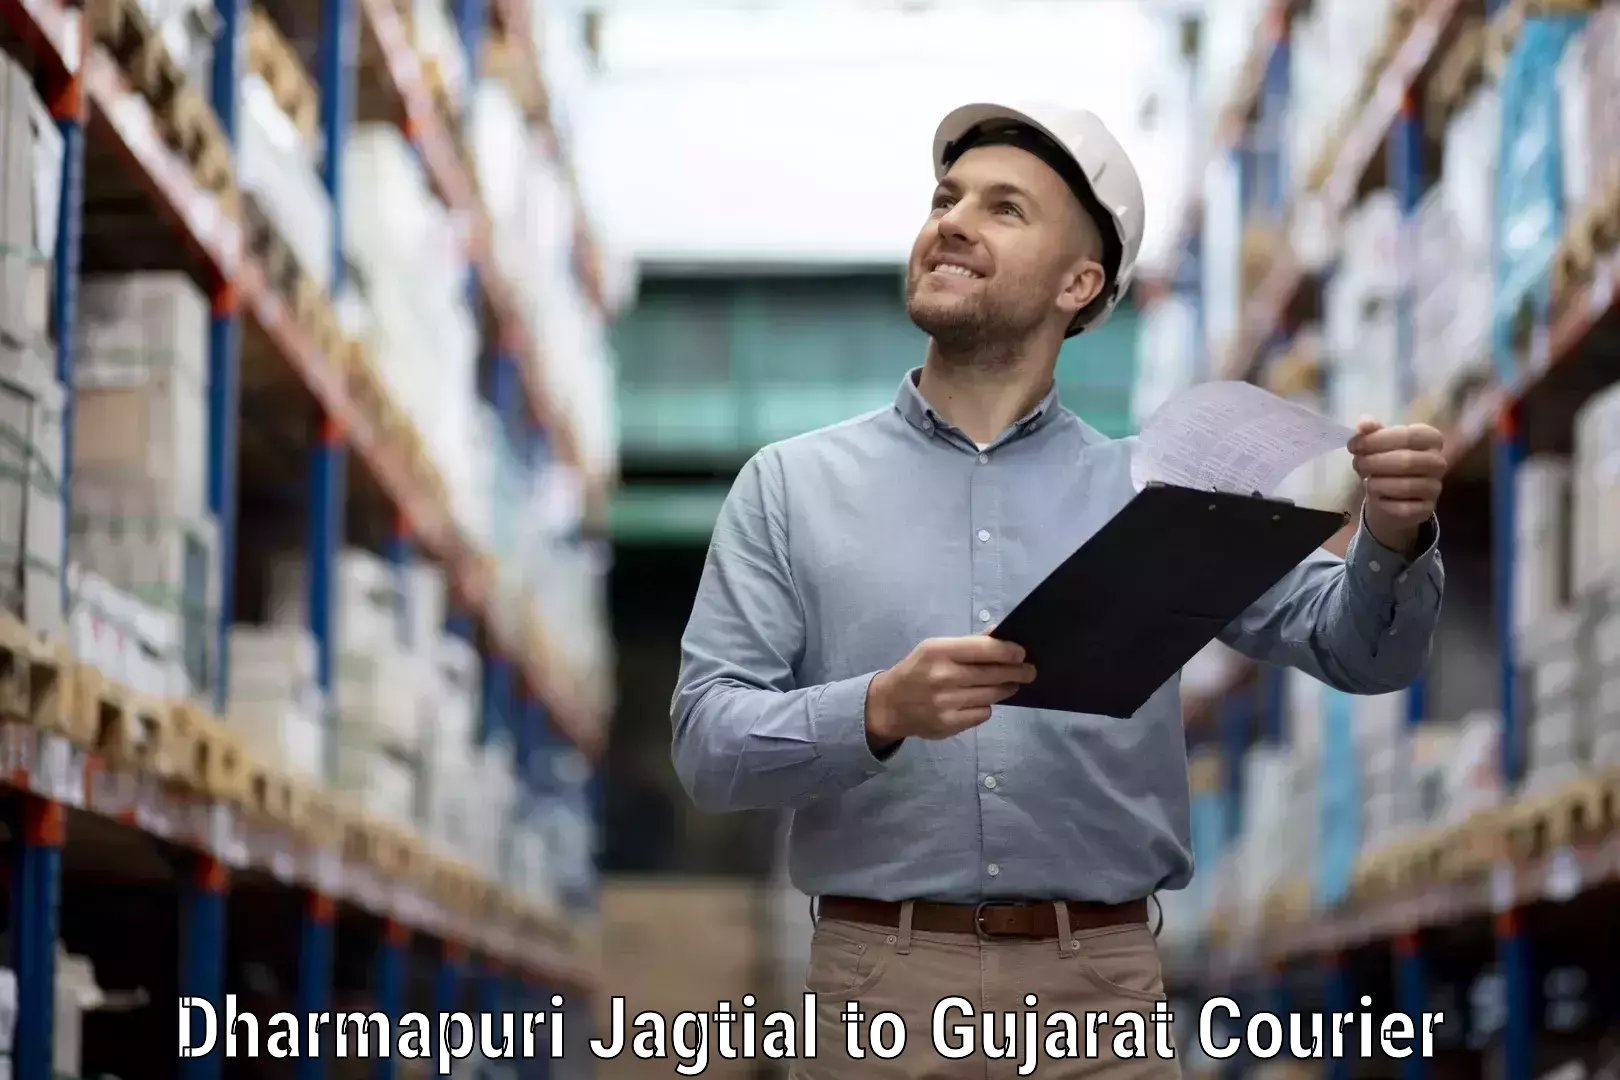 High-efficiency logistics Dharmapuri Jagtial to GIDC